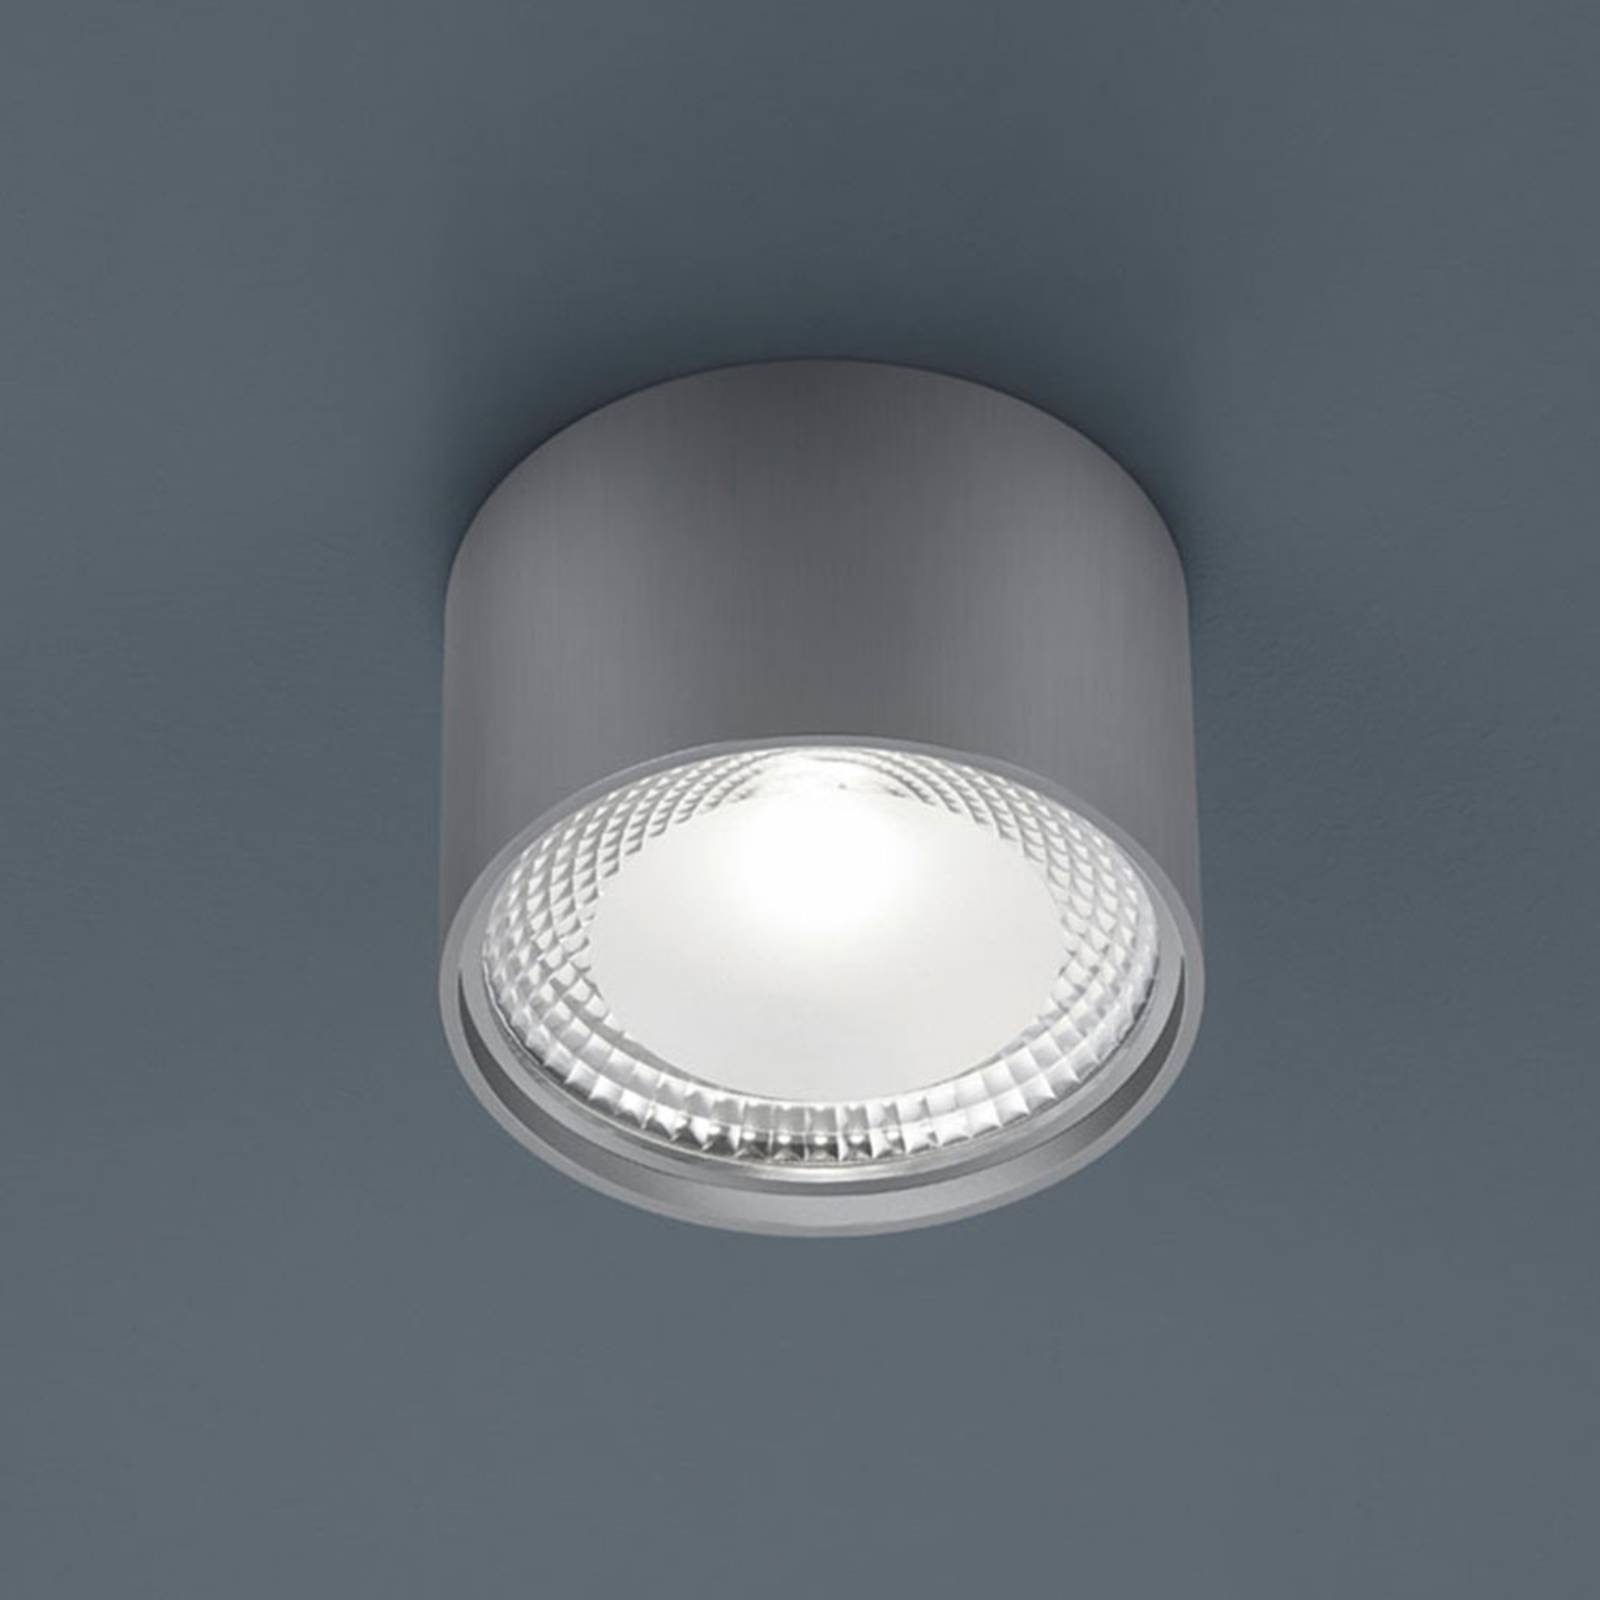 Helestra Kari lampa sufitowa LED, okrągła, nikiel